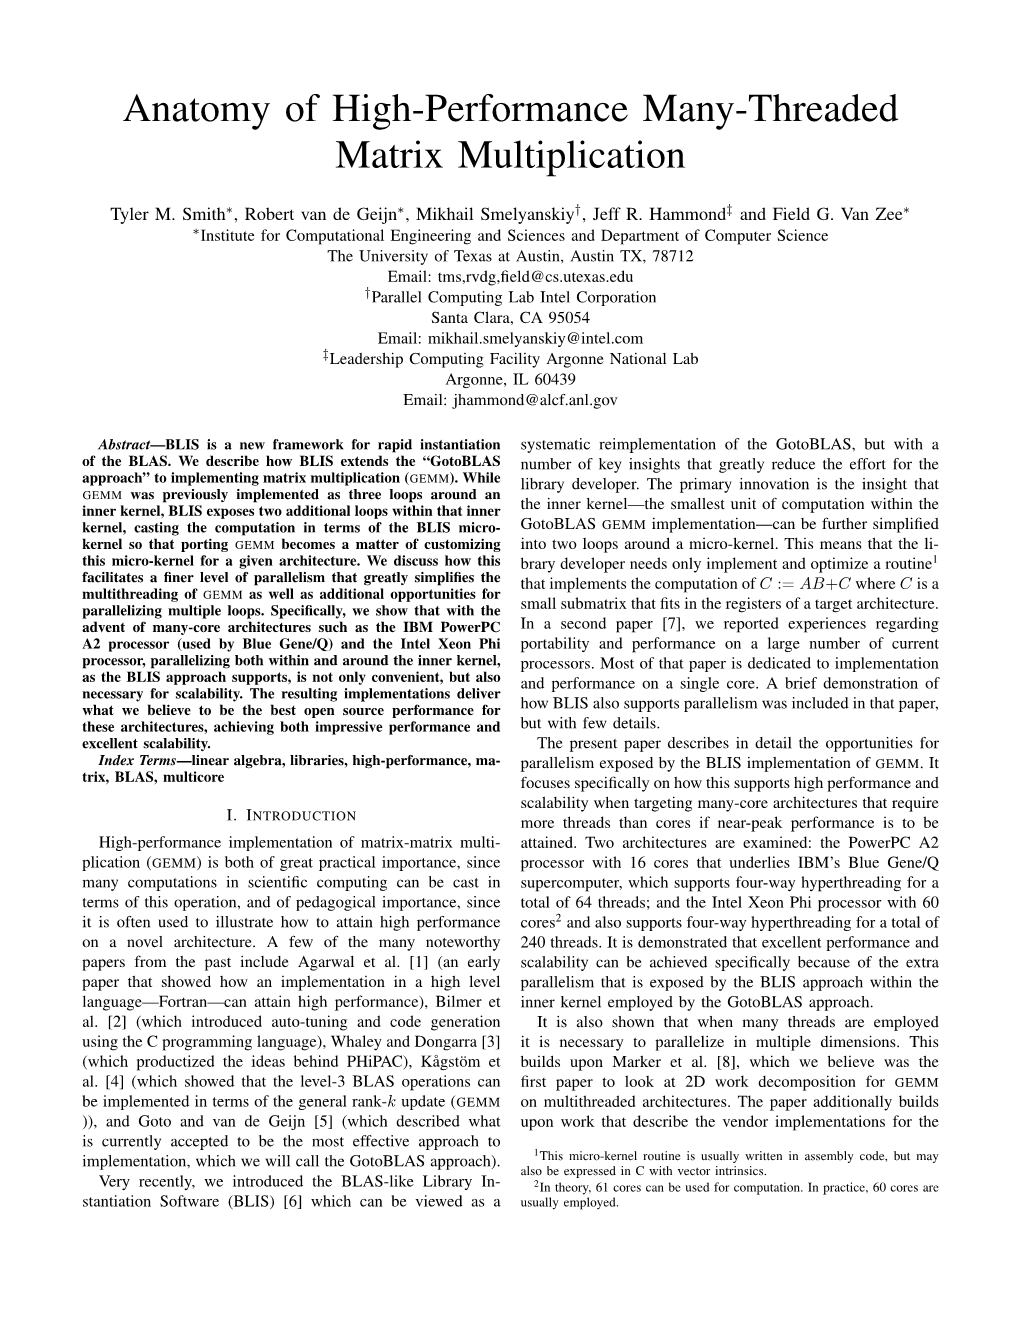 Anatomy of High-Performance Many-Threaded Matrix Multiplication